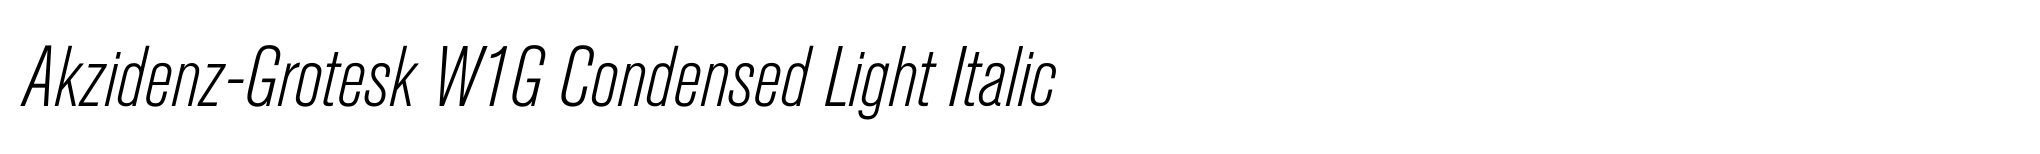 Akzidenz-Grotesk W1G Condensed Light Italic image